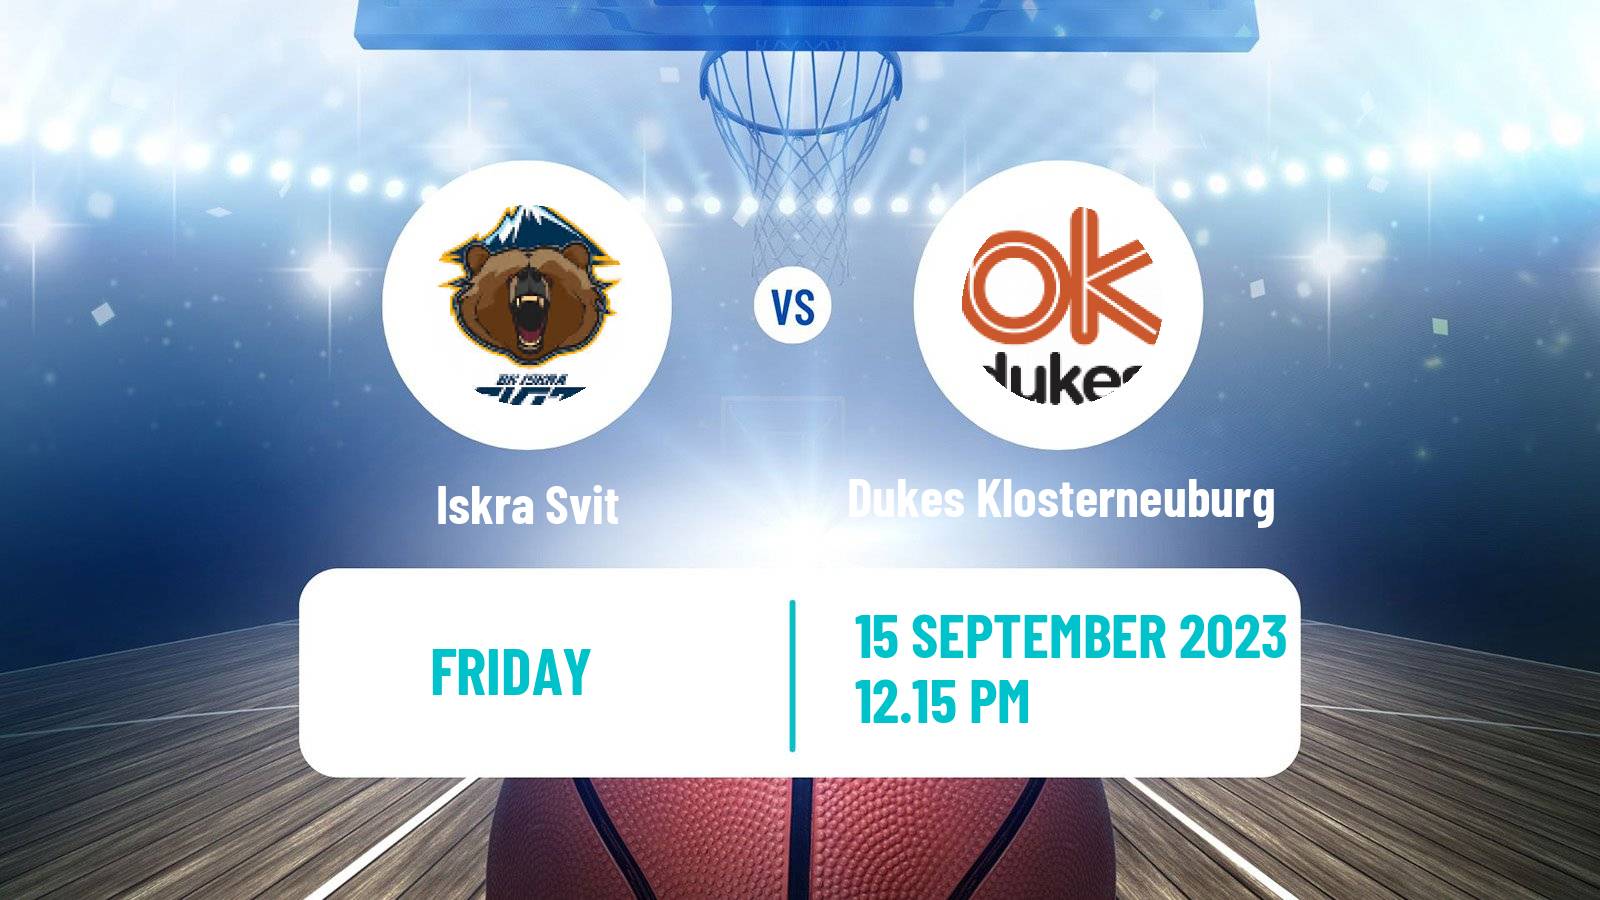 Basketball Club Friendly Basketball Iskra Svit - Dukes Klosterneuburg